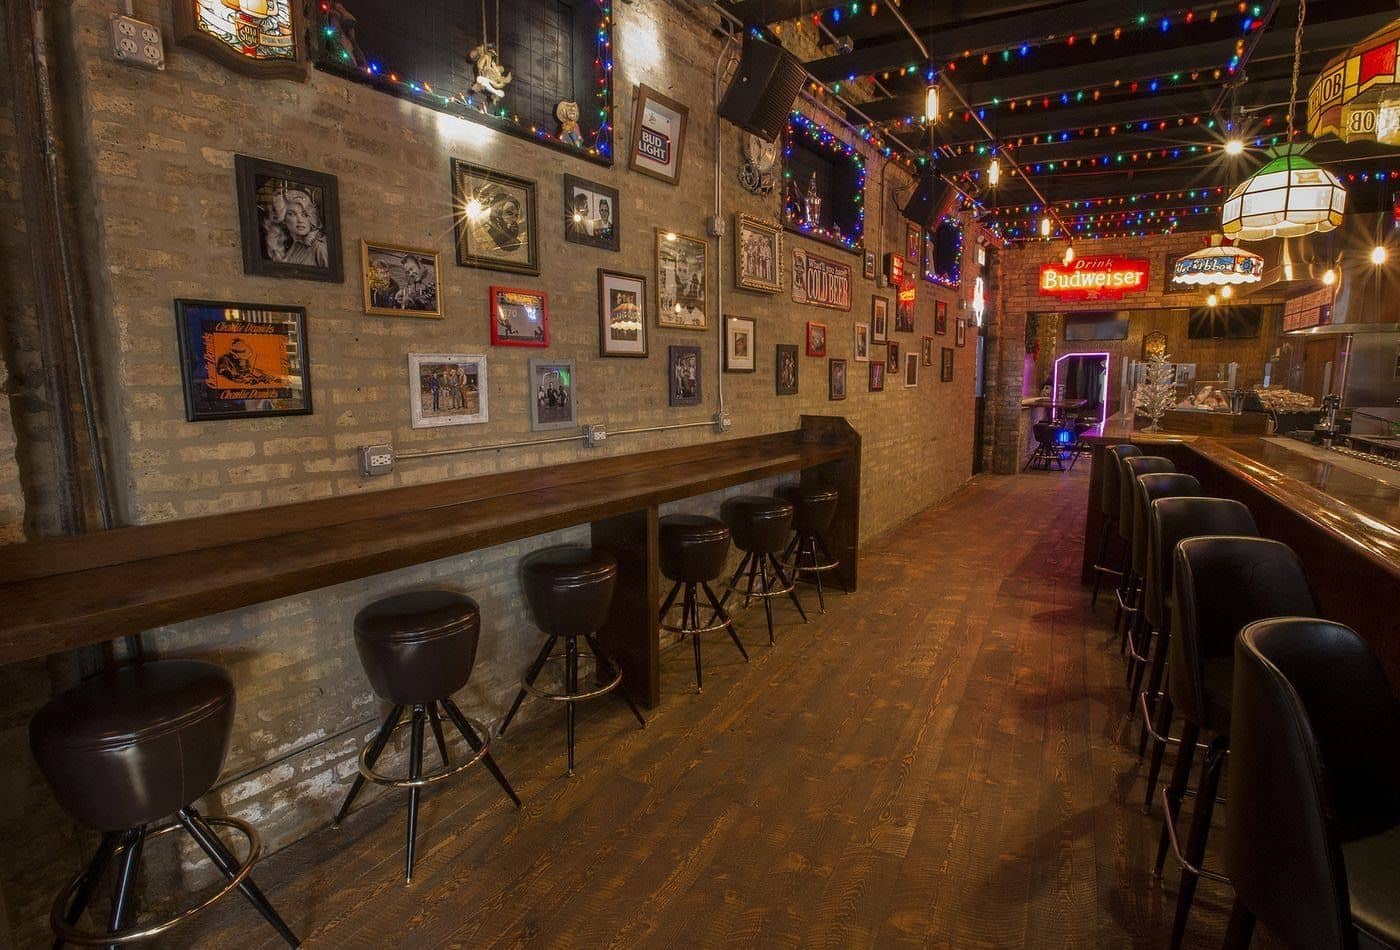 Brick wall, photos, and bar view inside Carol's Pub 